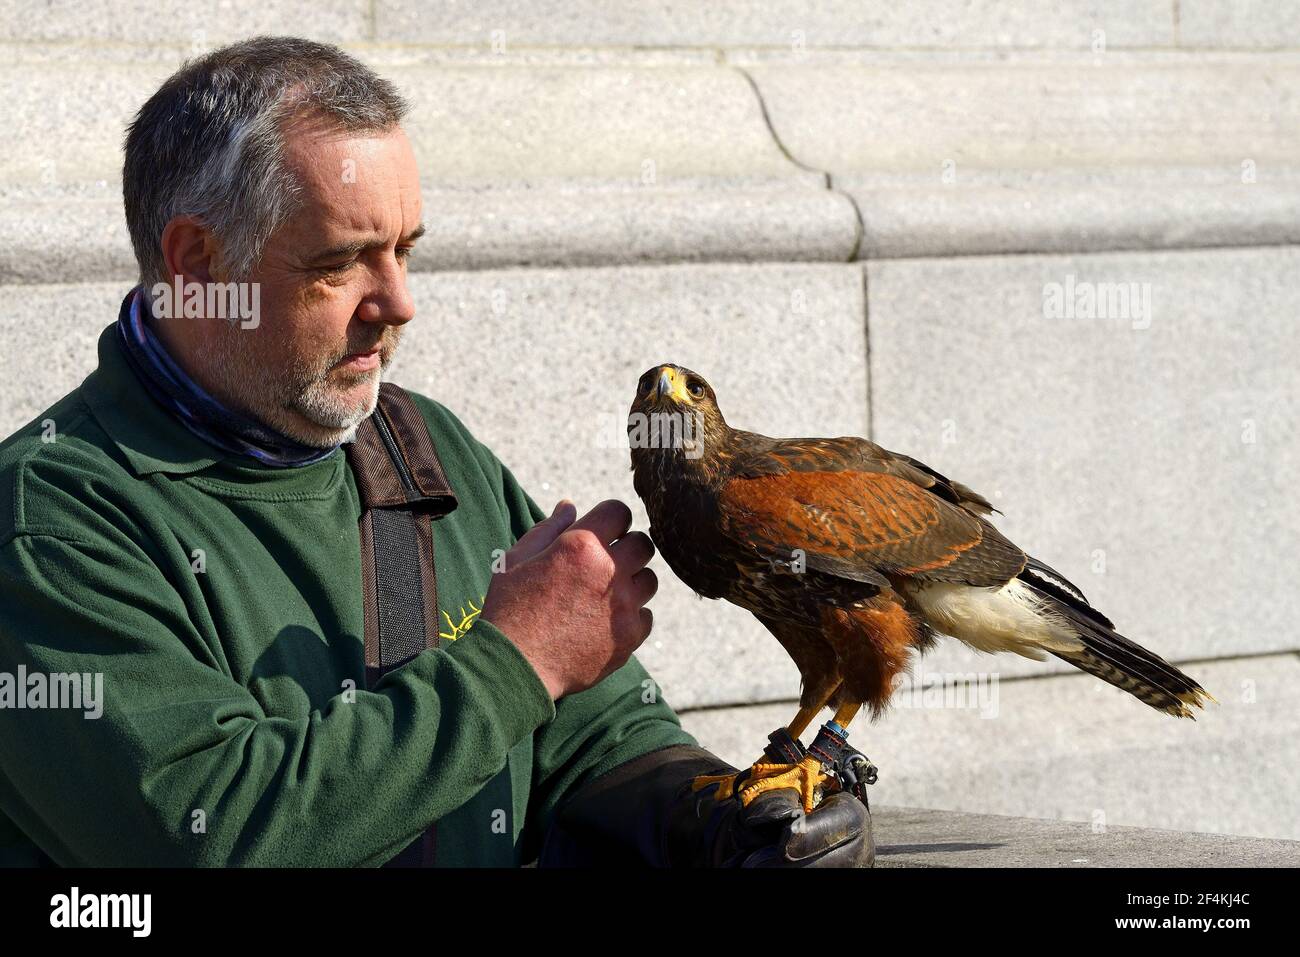 London, England, UK. Trafalgar Square. Harris's hawk (Parabuteo unicinctus - female) trained to chase away pigeons from the square, with her Harris Ha Stock Photo